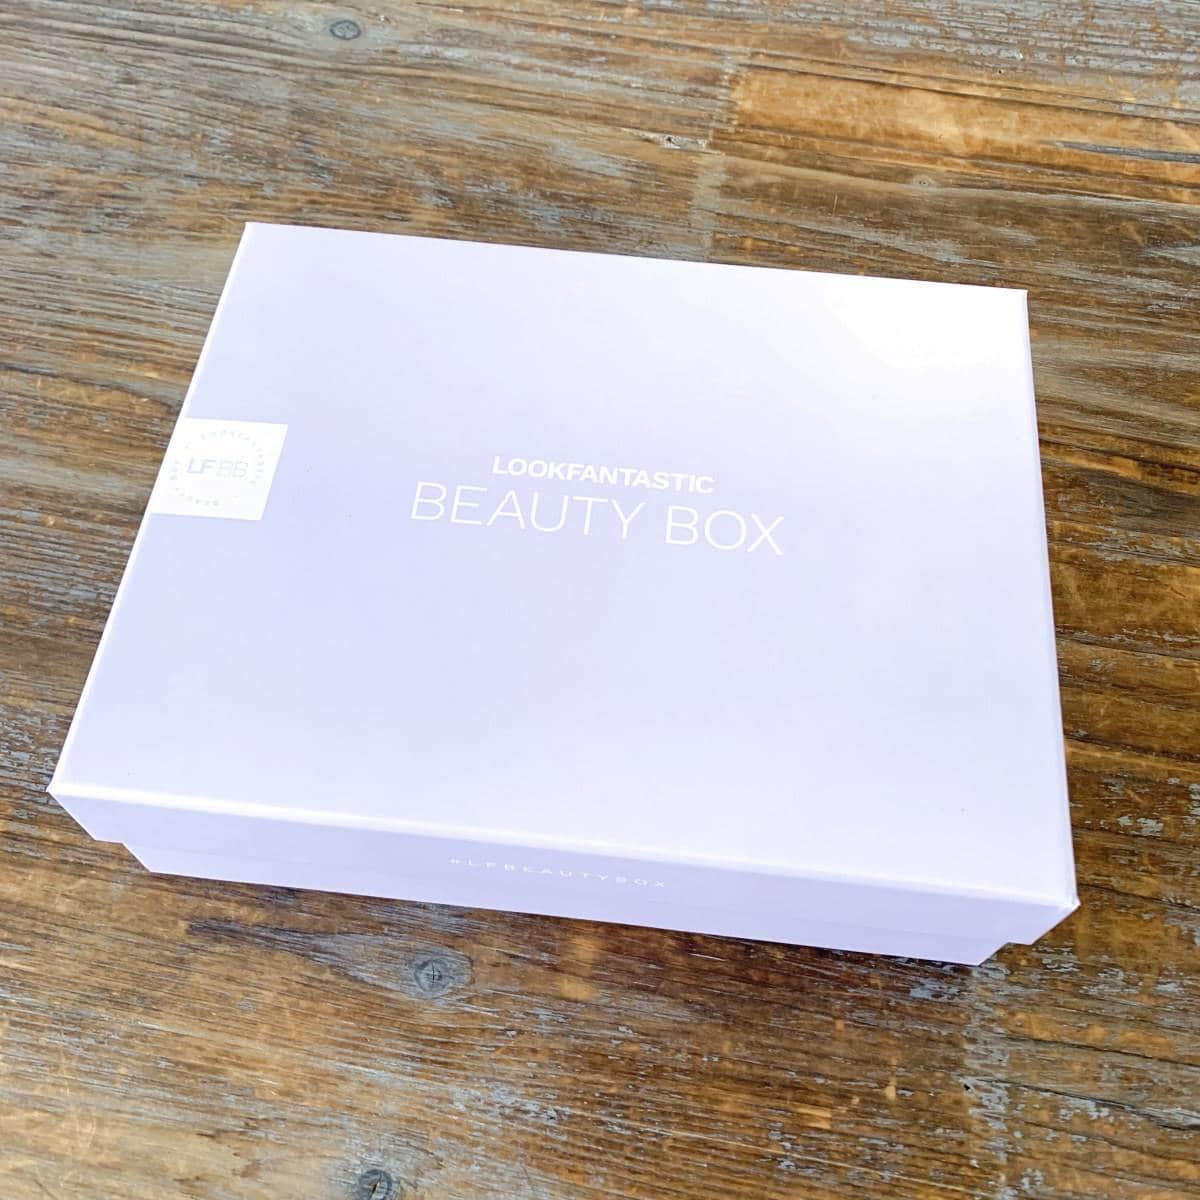 lookfantastic beauty box january 2021 review 3